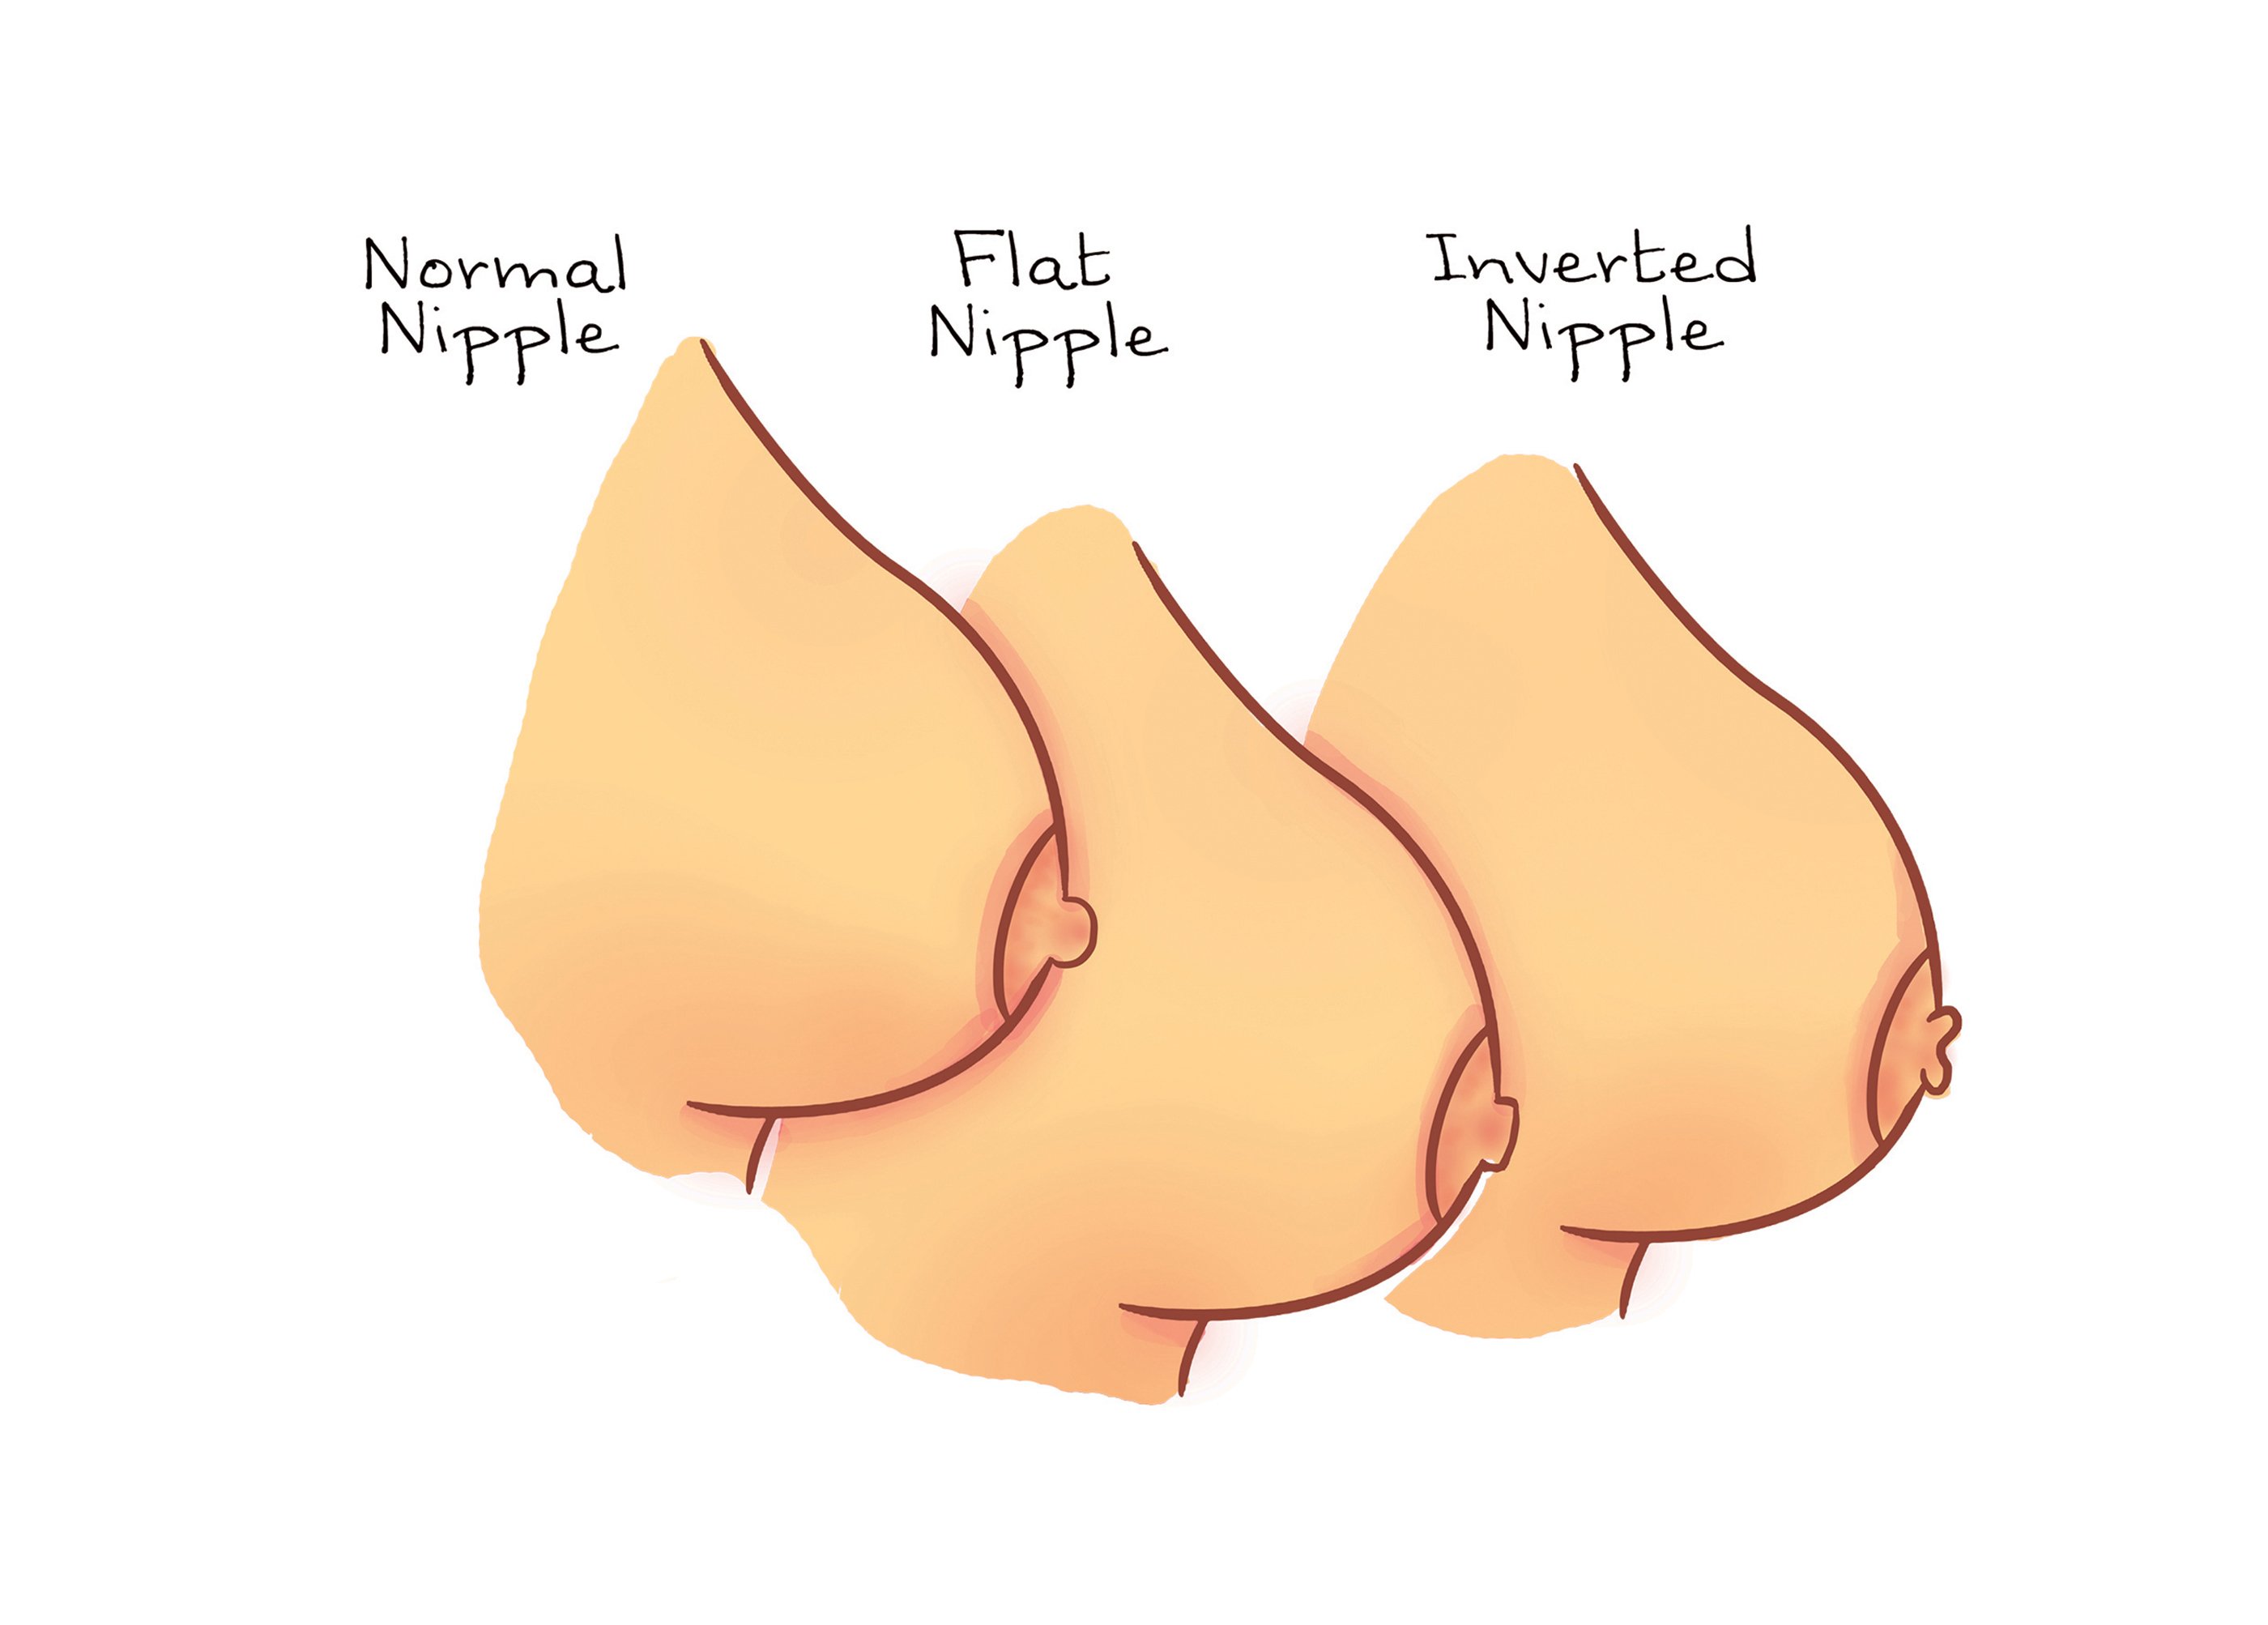 Changes in nipple shape, illustration - Stock Image - F034/4697